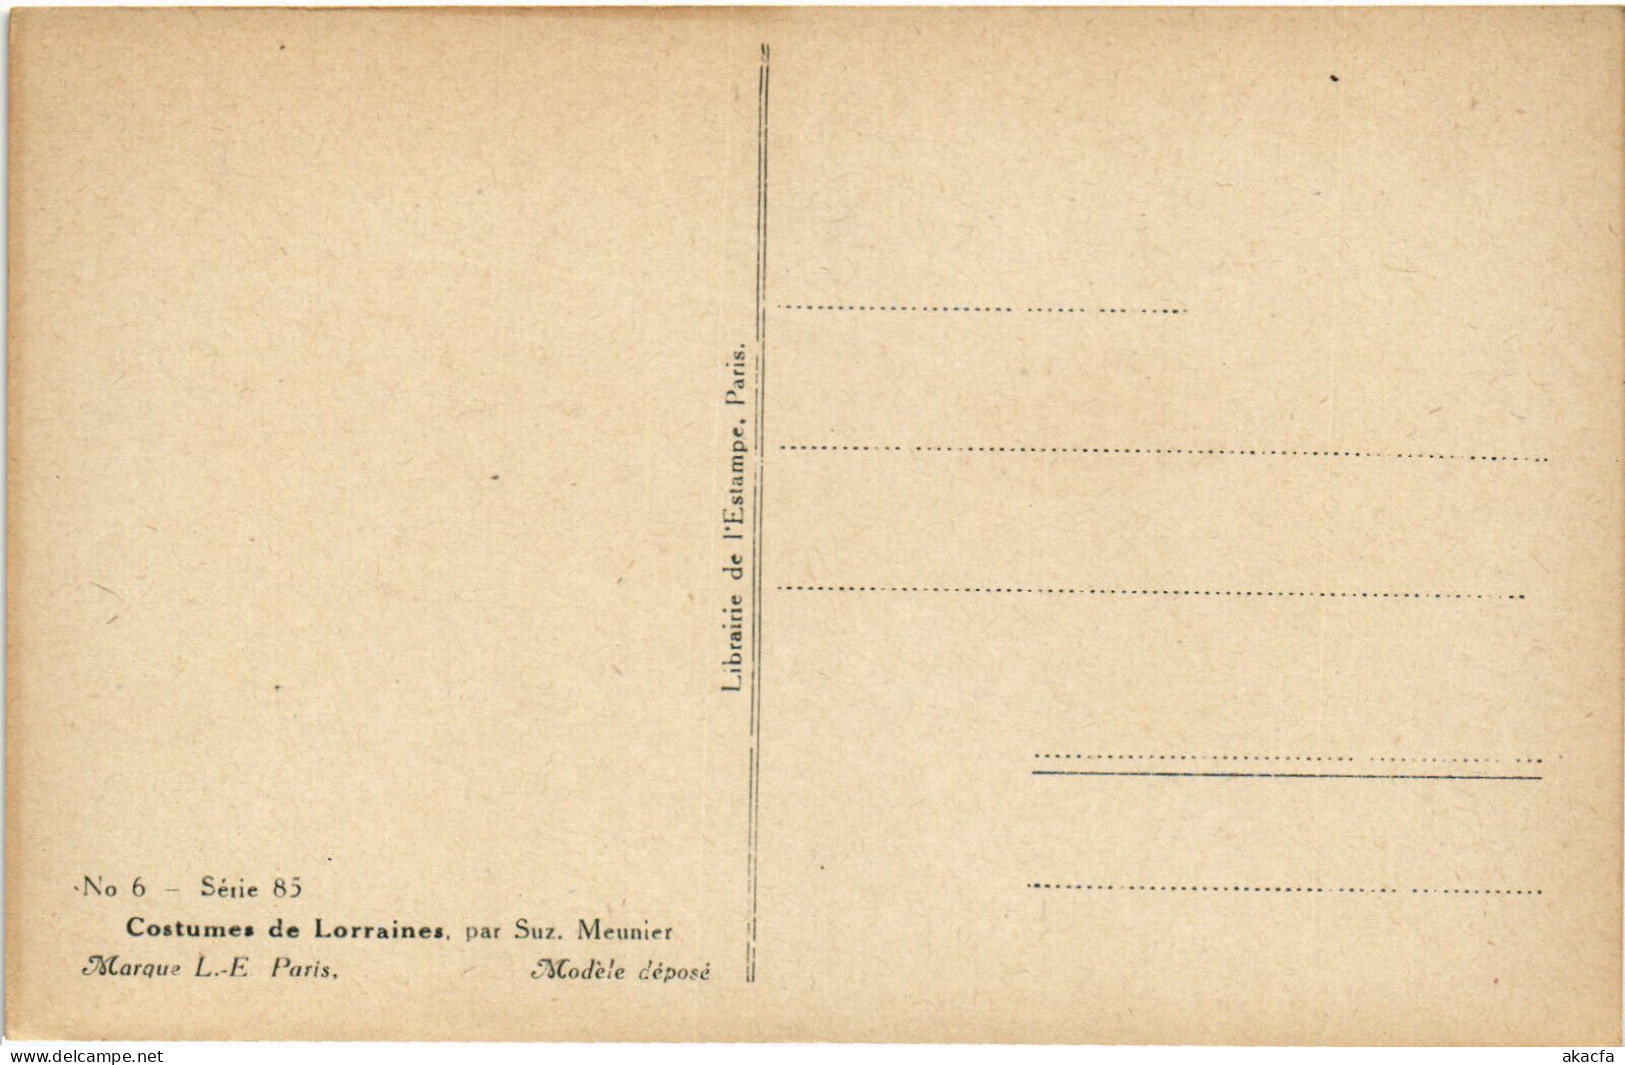 PC ARTIST SIGNED, MEUNIER, COSTUMES DE LORRAINES, Vintage Postcard (b51688) - Meunier, S.